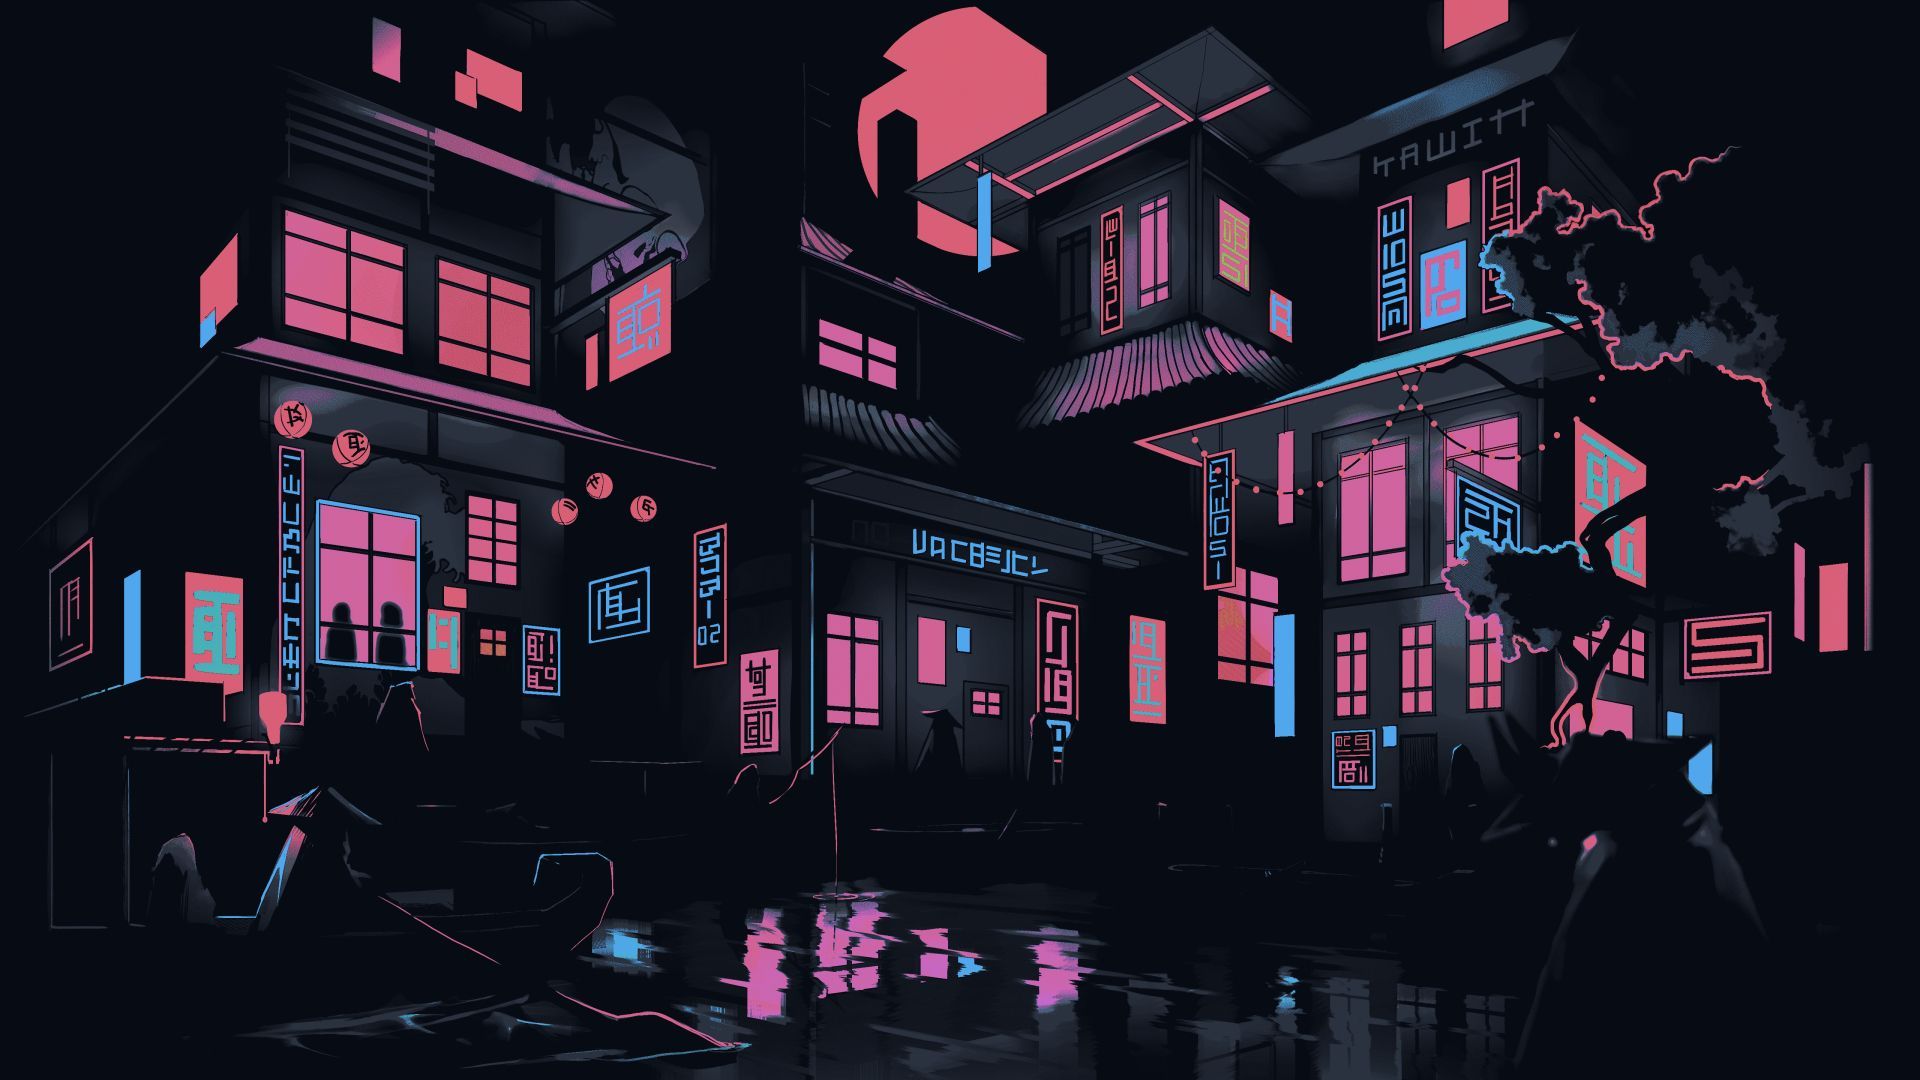 A digital painting of a cyberpunk city at night - Cyberpunk, Japan, Japanese